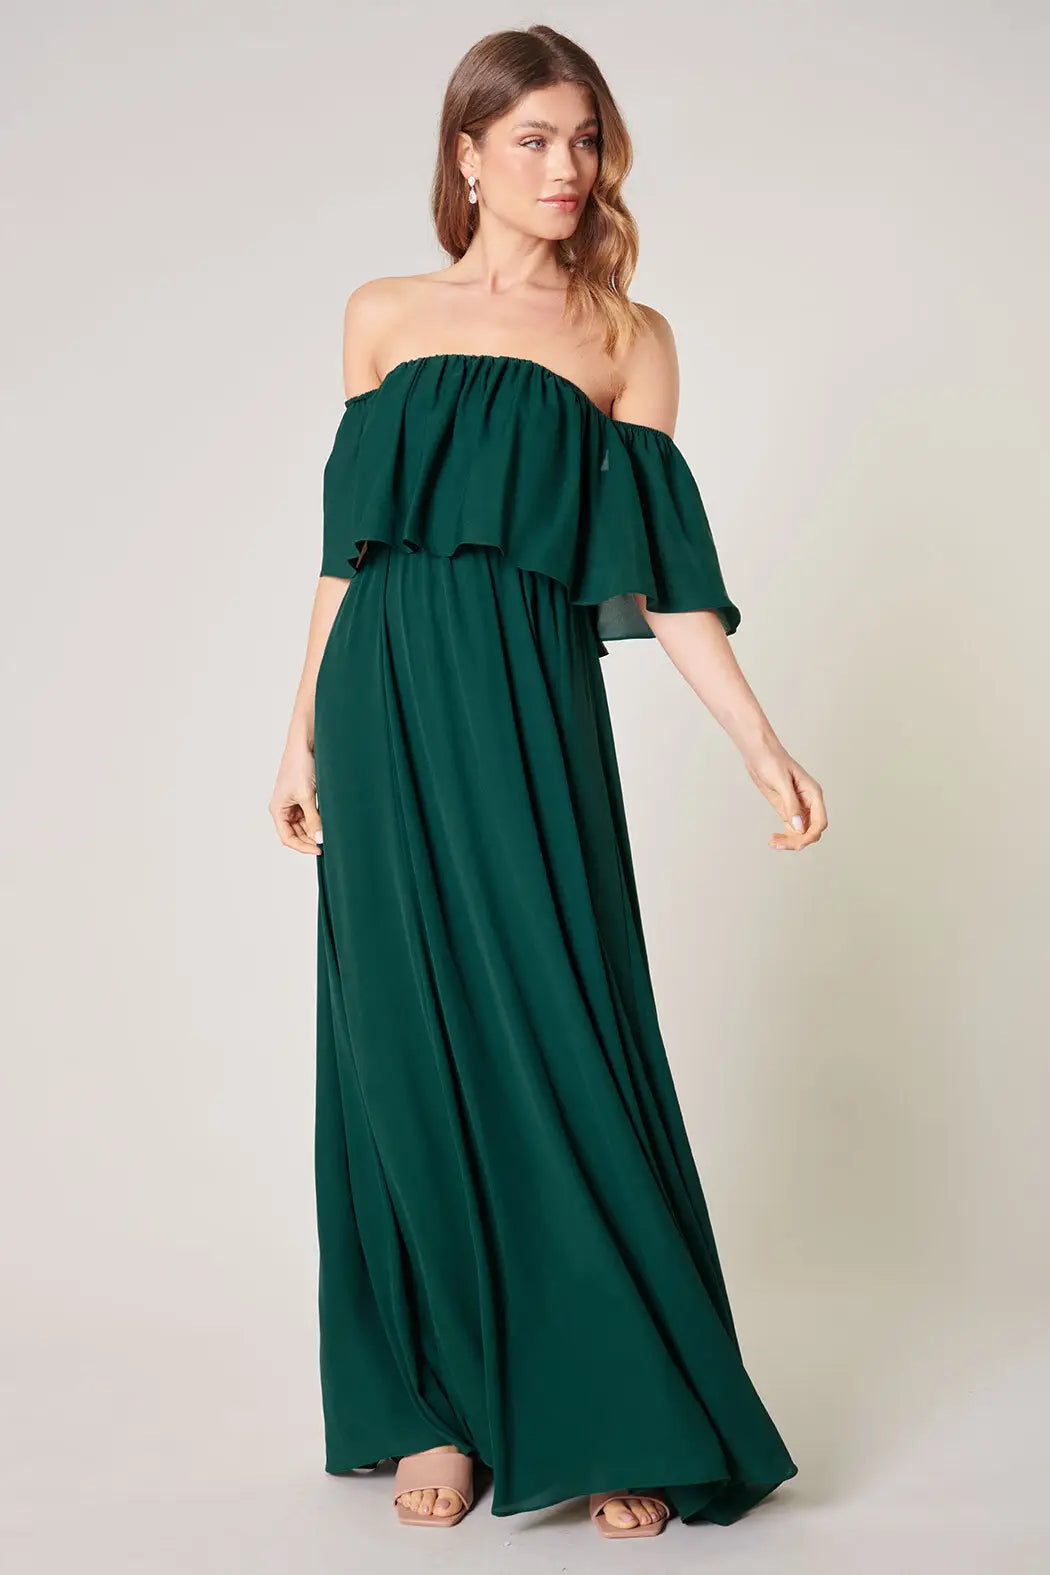 Enamored Off the Shoulder Ruffle Dress - Emerald Green